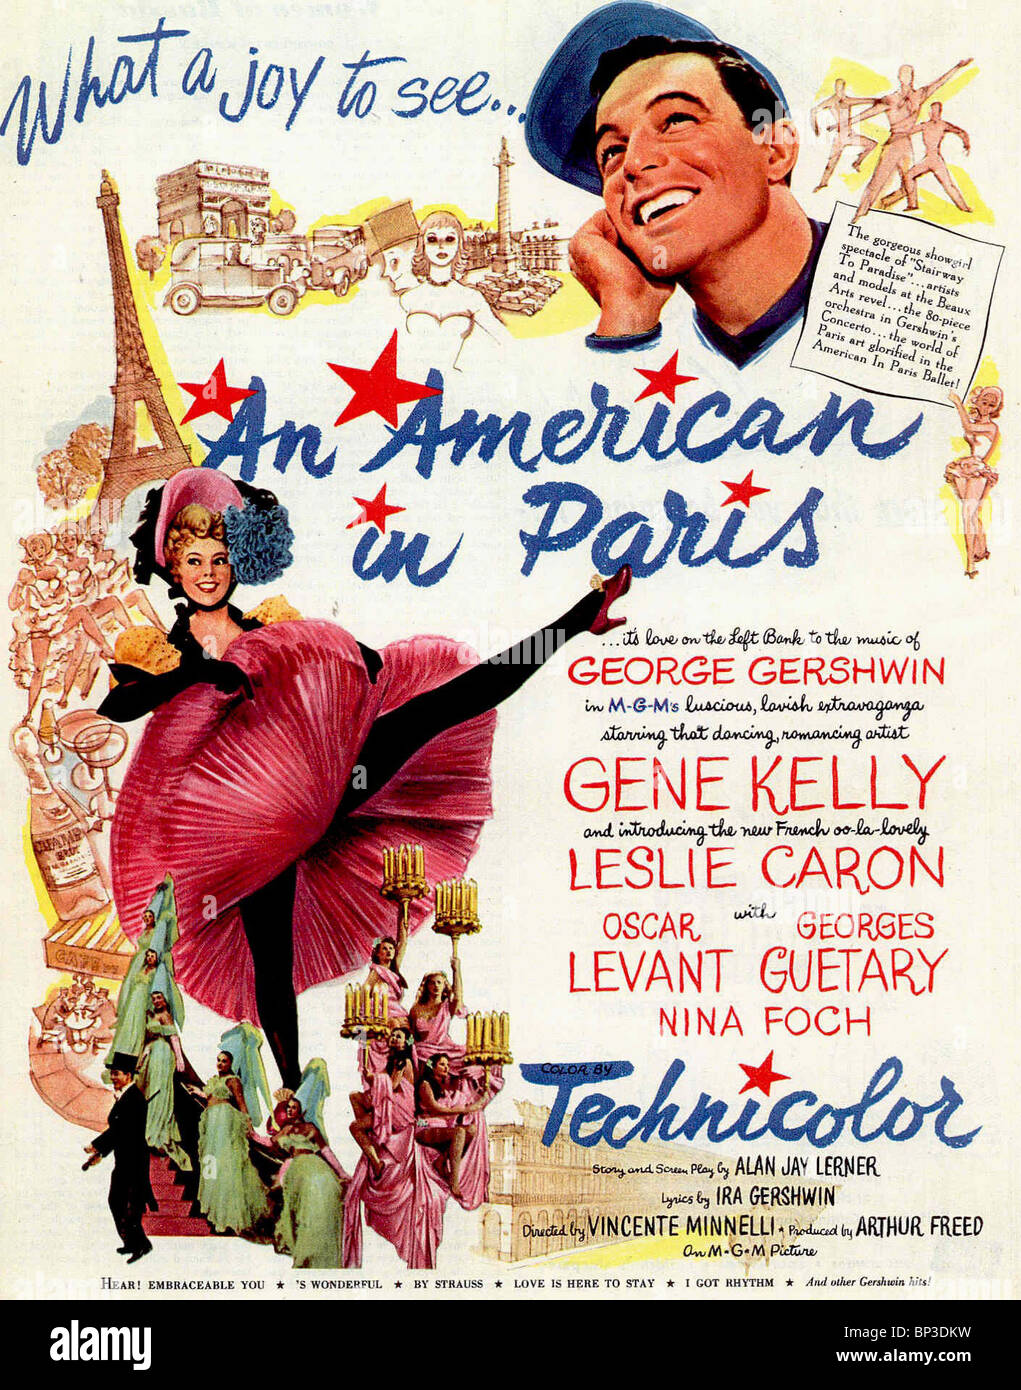 GENE KELLY, LESLIE CARON POSTER, AN AMERICAN IN PARIS, 1951 Stock Photo